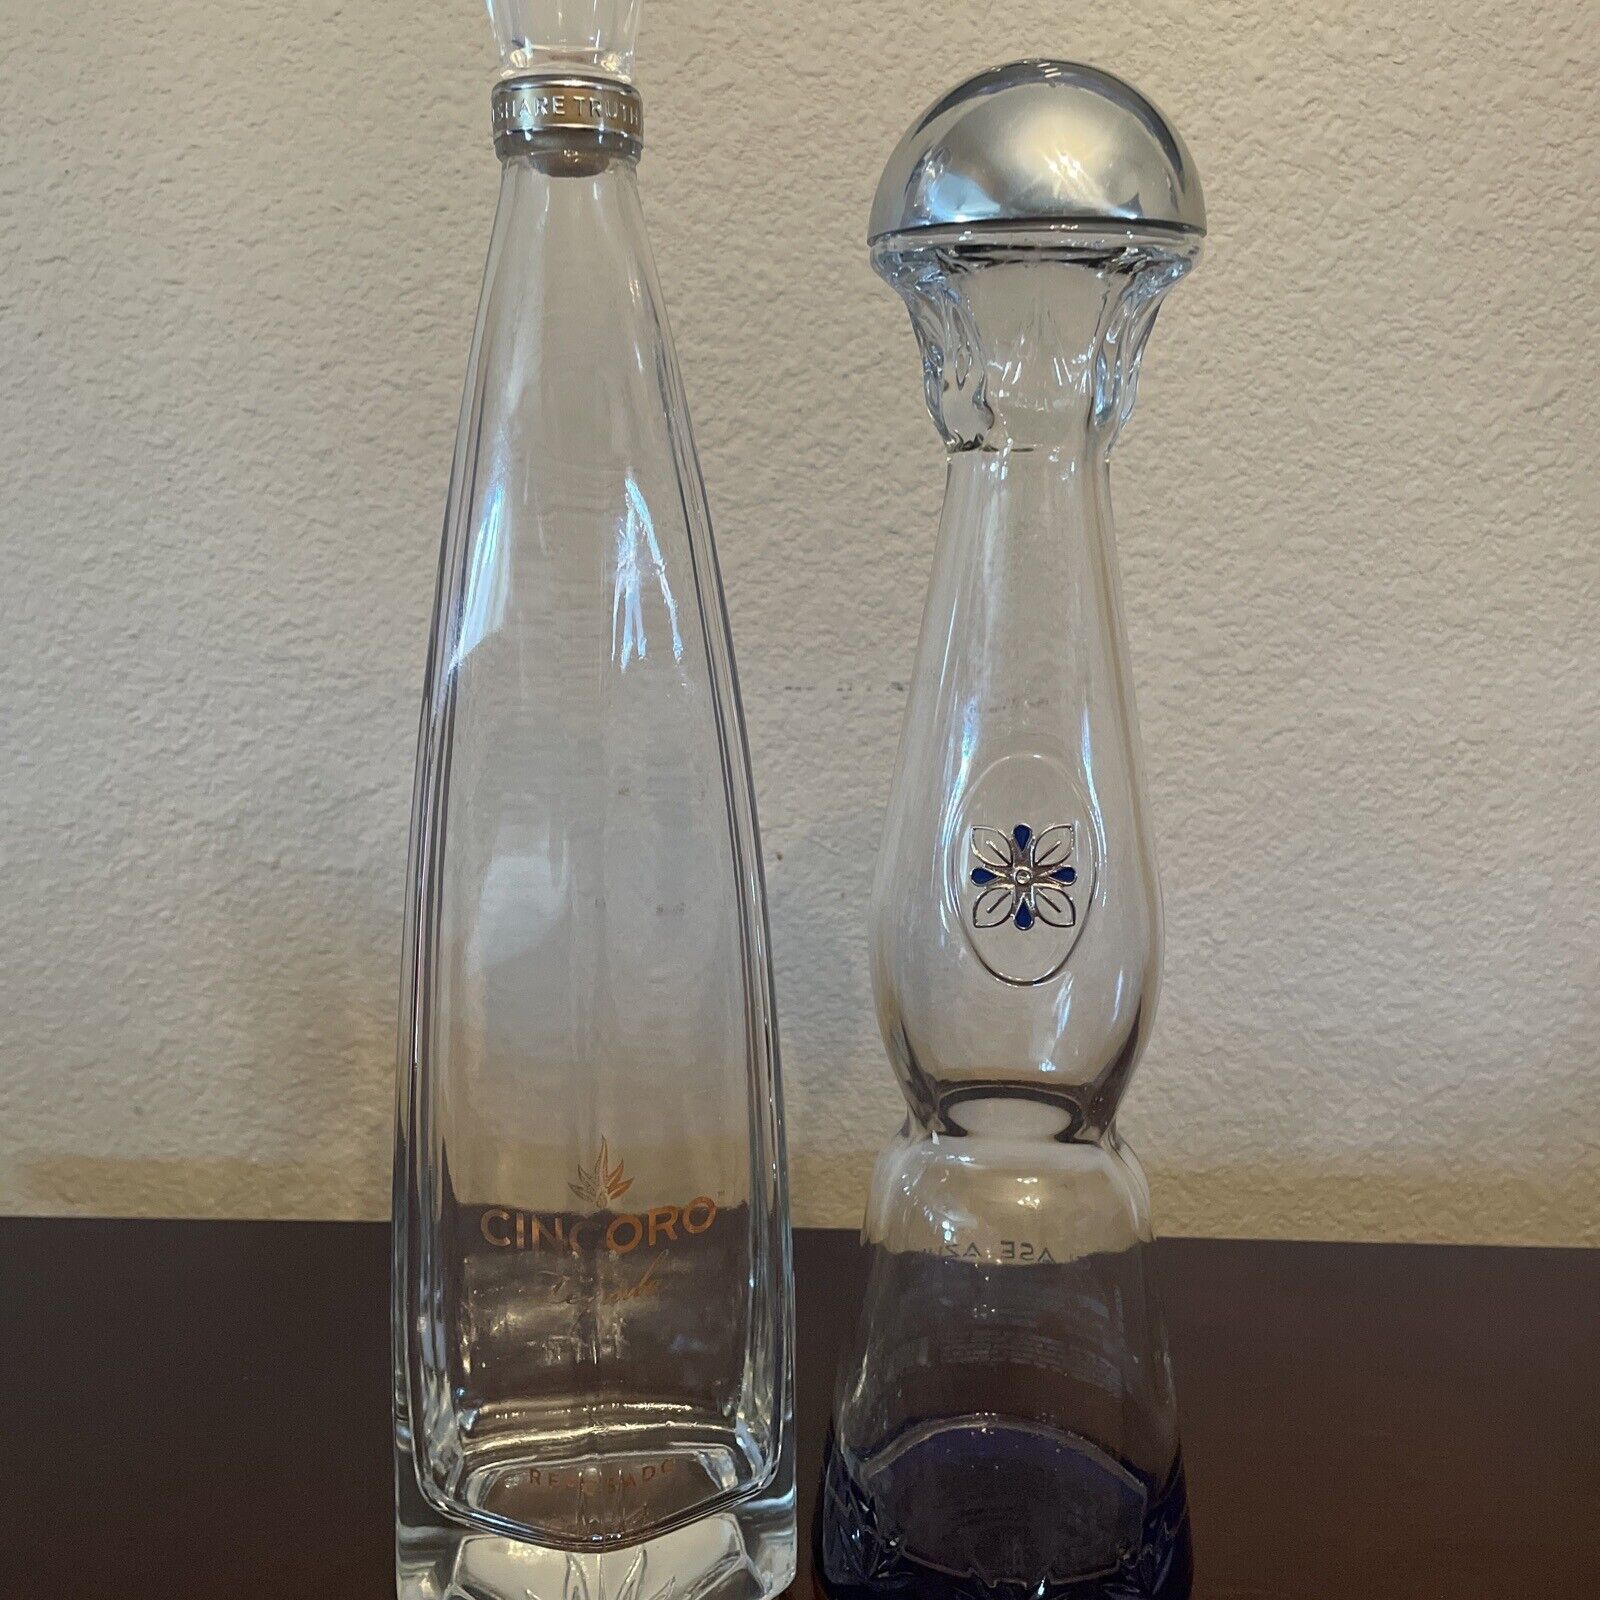 2 Top Shelf Tequila Bottles Clase Azul Plata, Cincoro Reprosado (Michael Jordan)